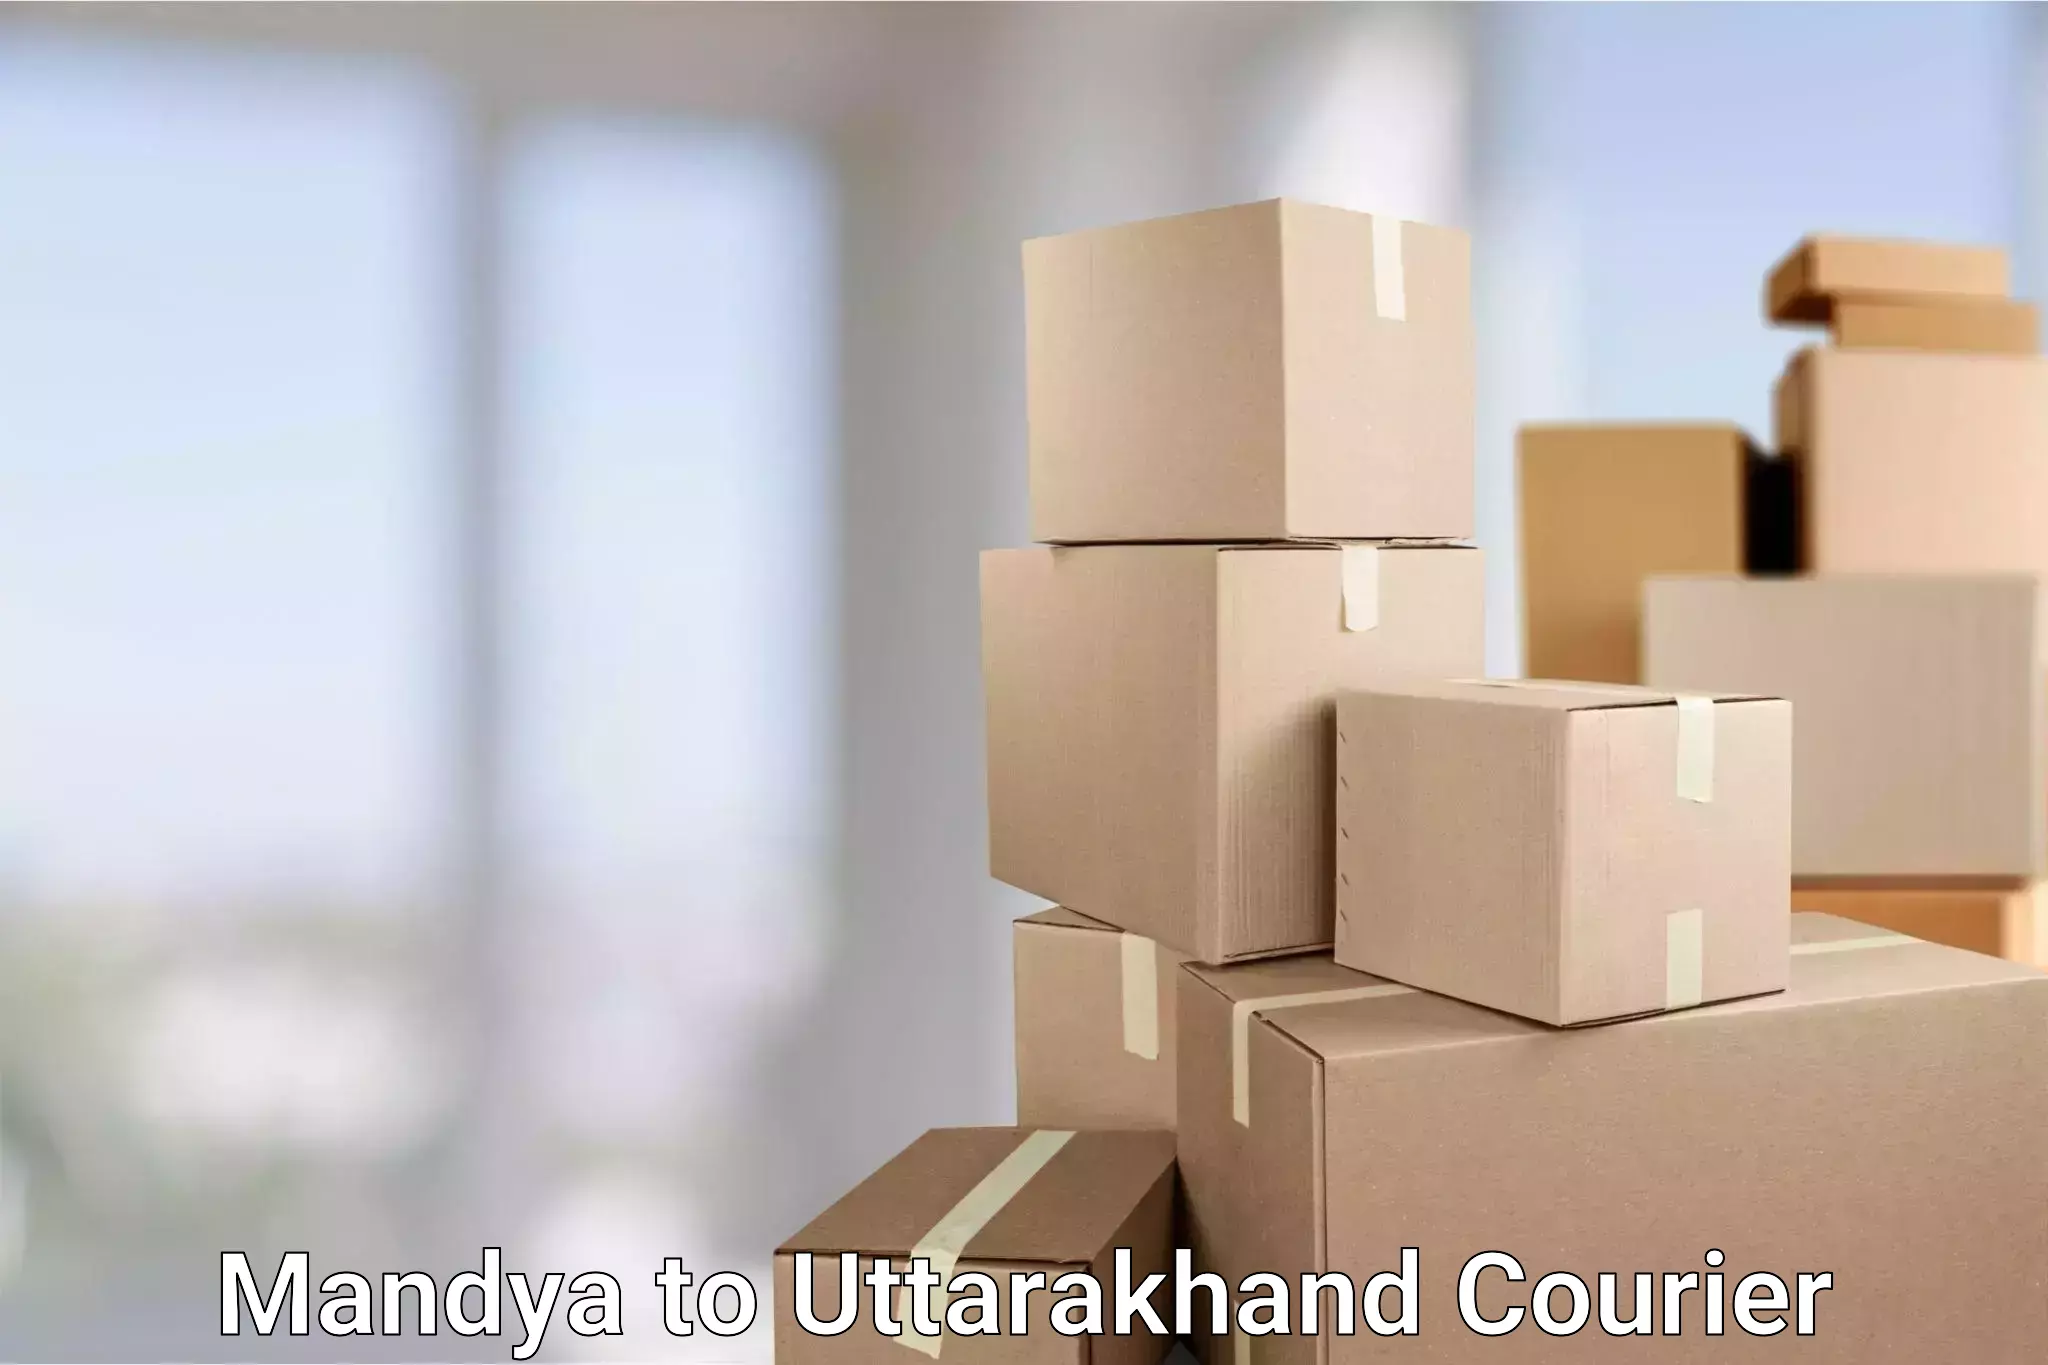 Global courier networks Mandya to Uttarakhand